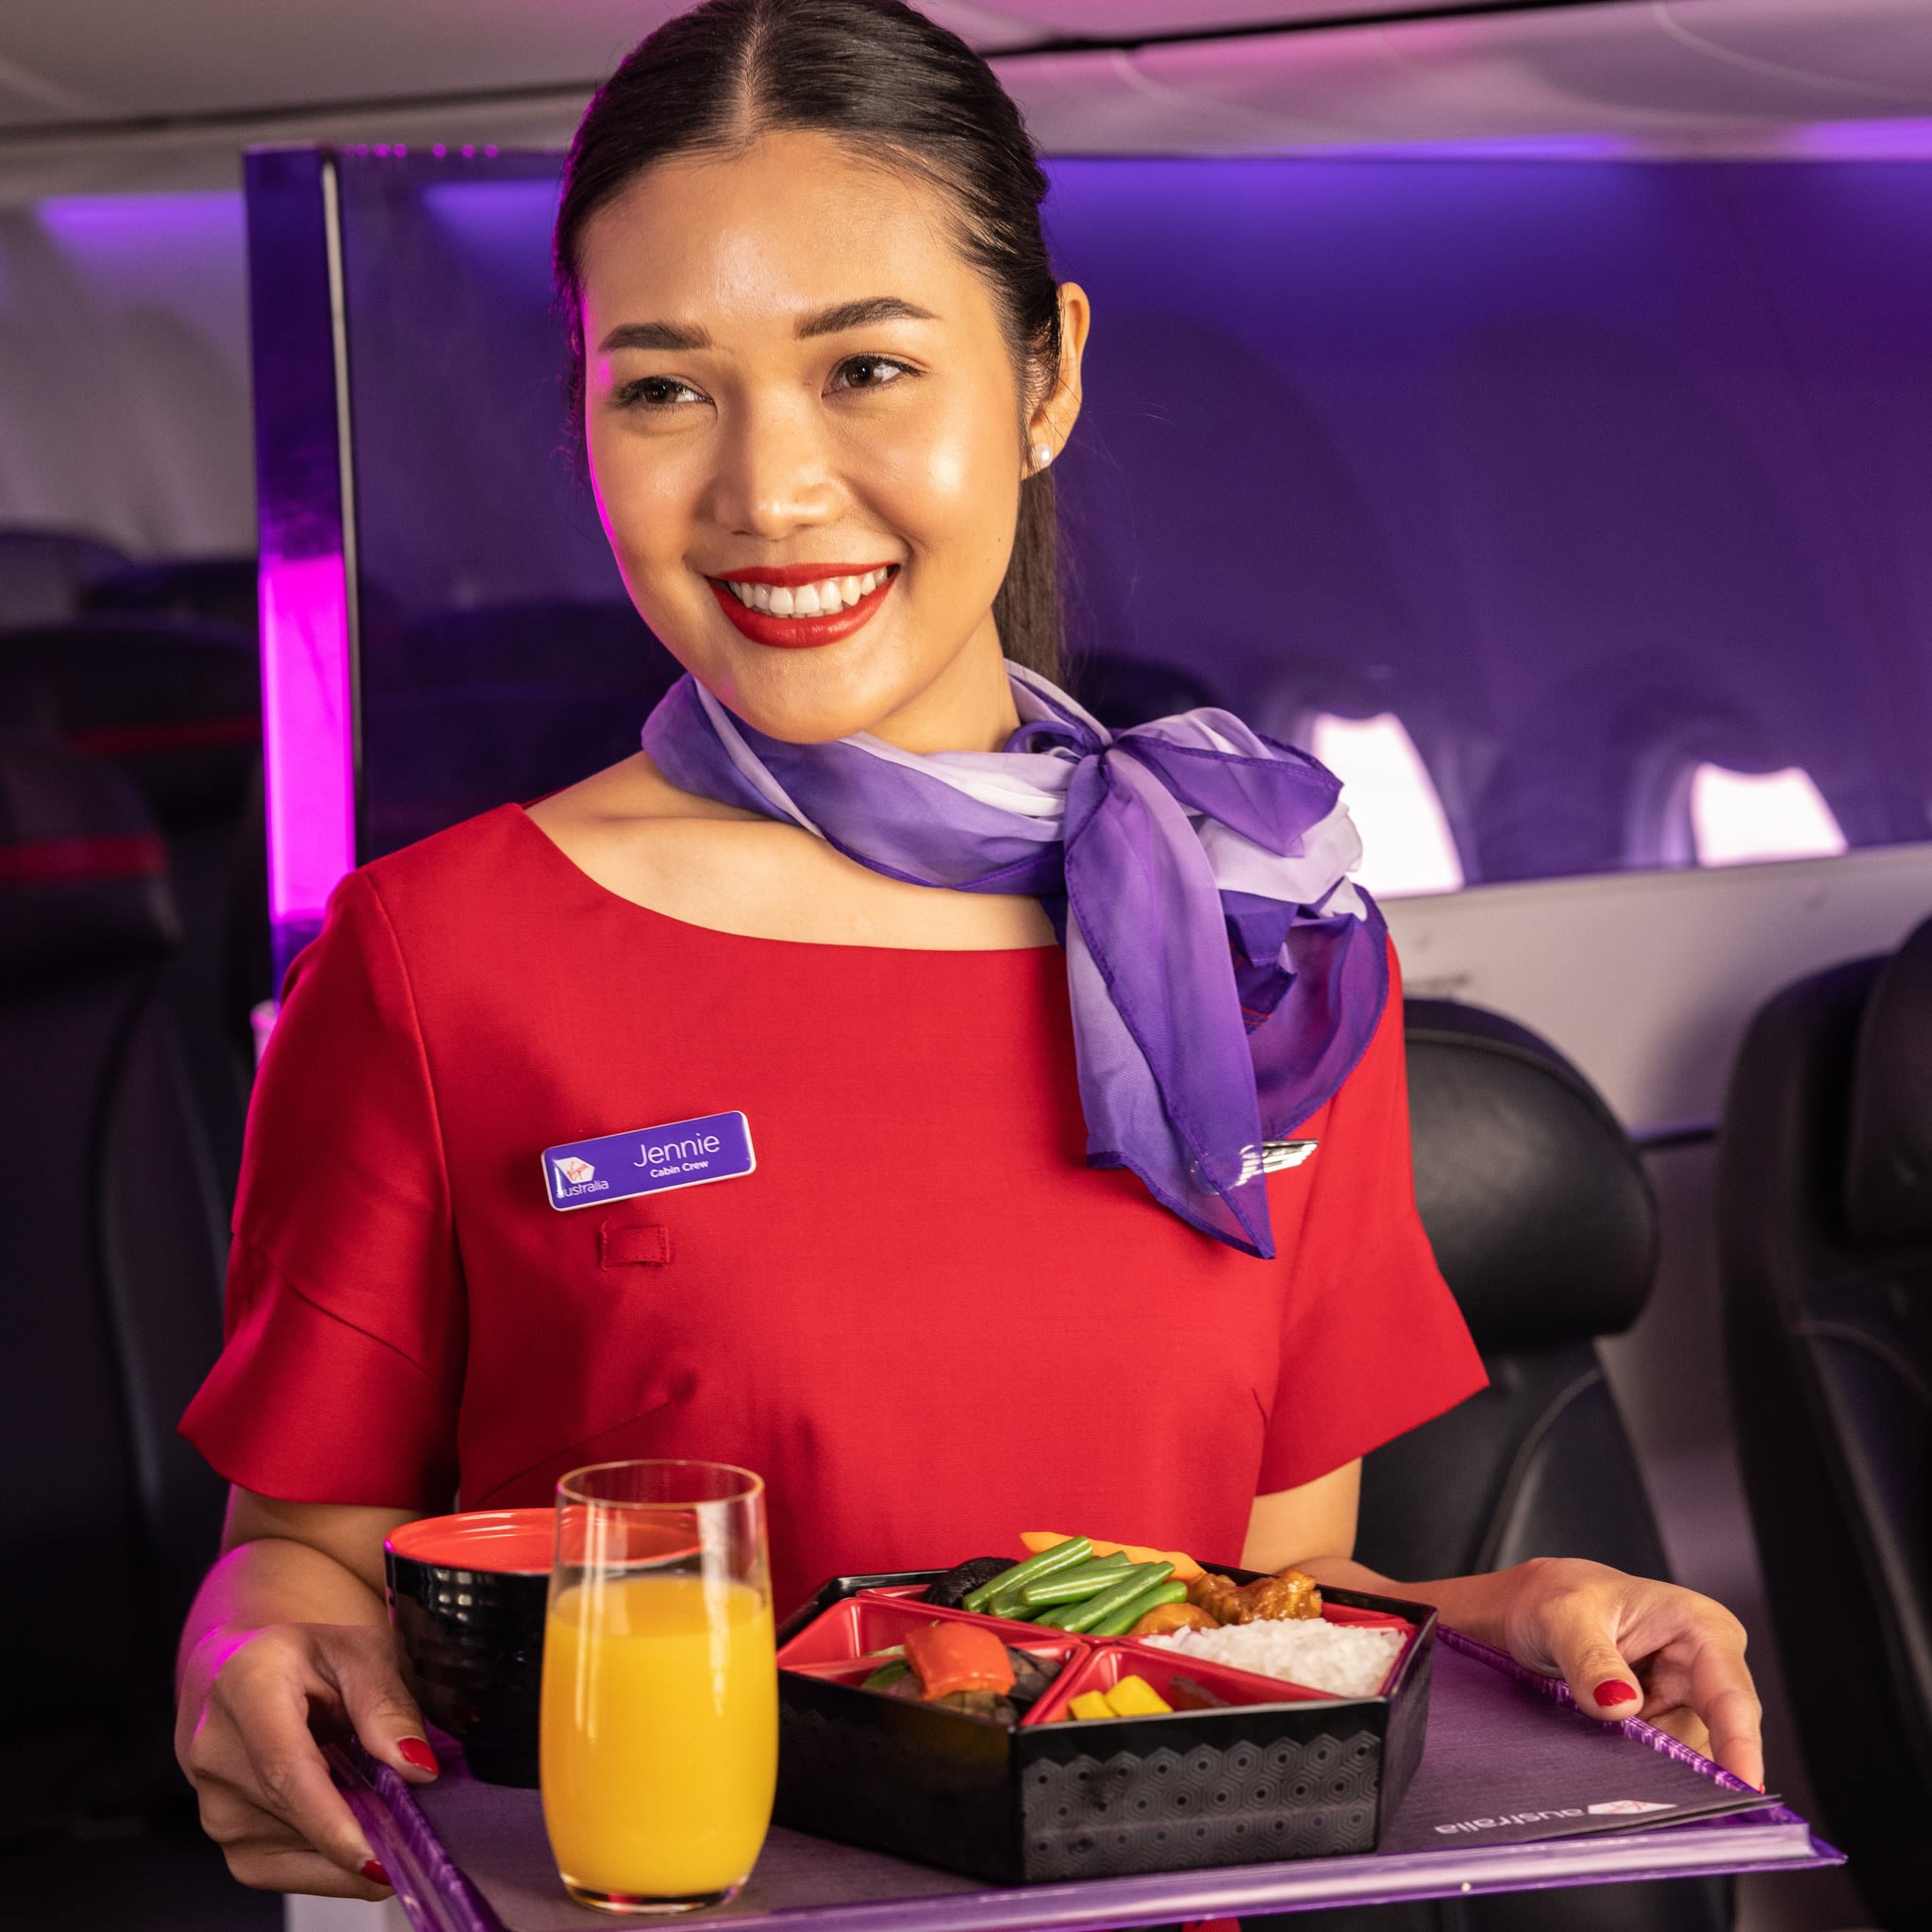 Virgin Australia's inaugural flight to Tokyo